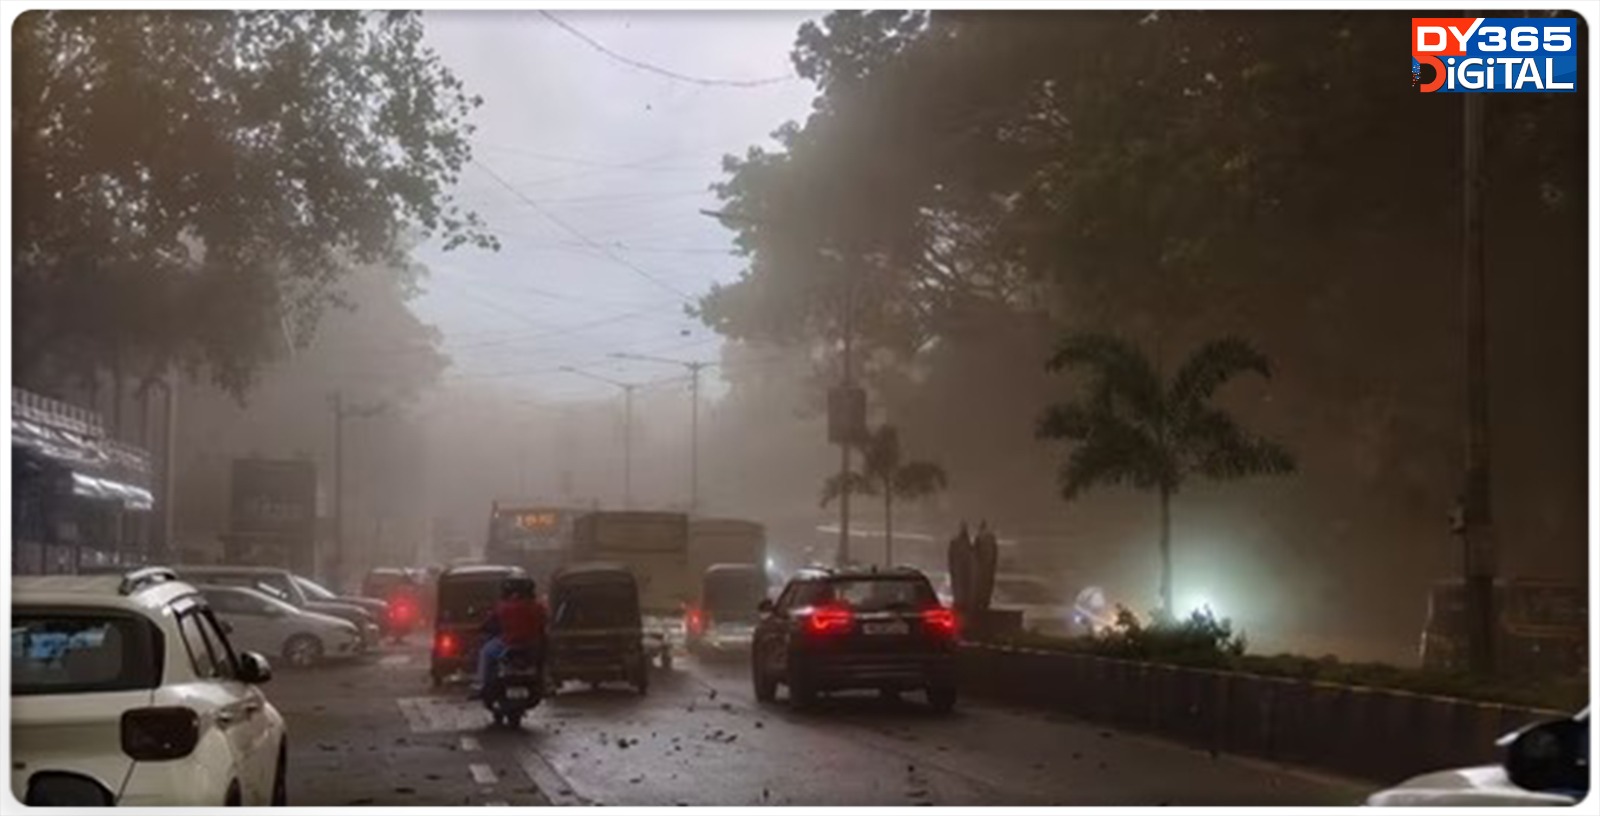 imd-warns-of-thunderstorm-in-mumbai